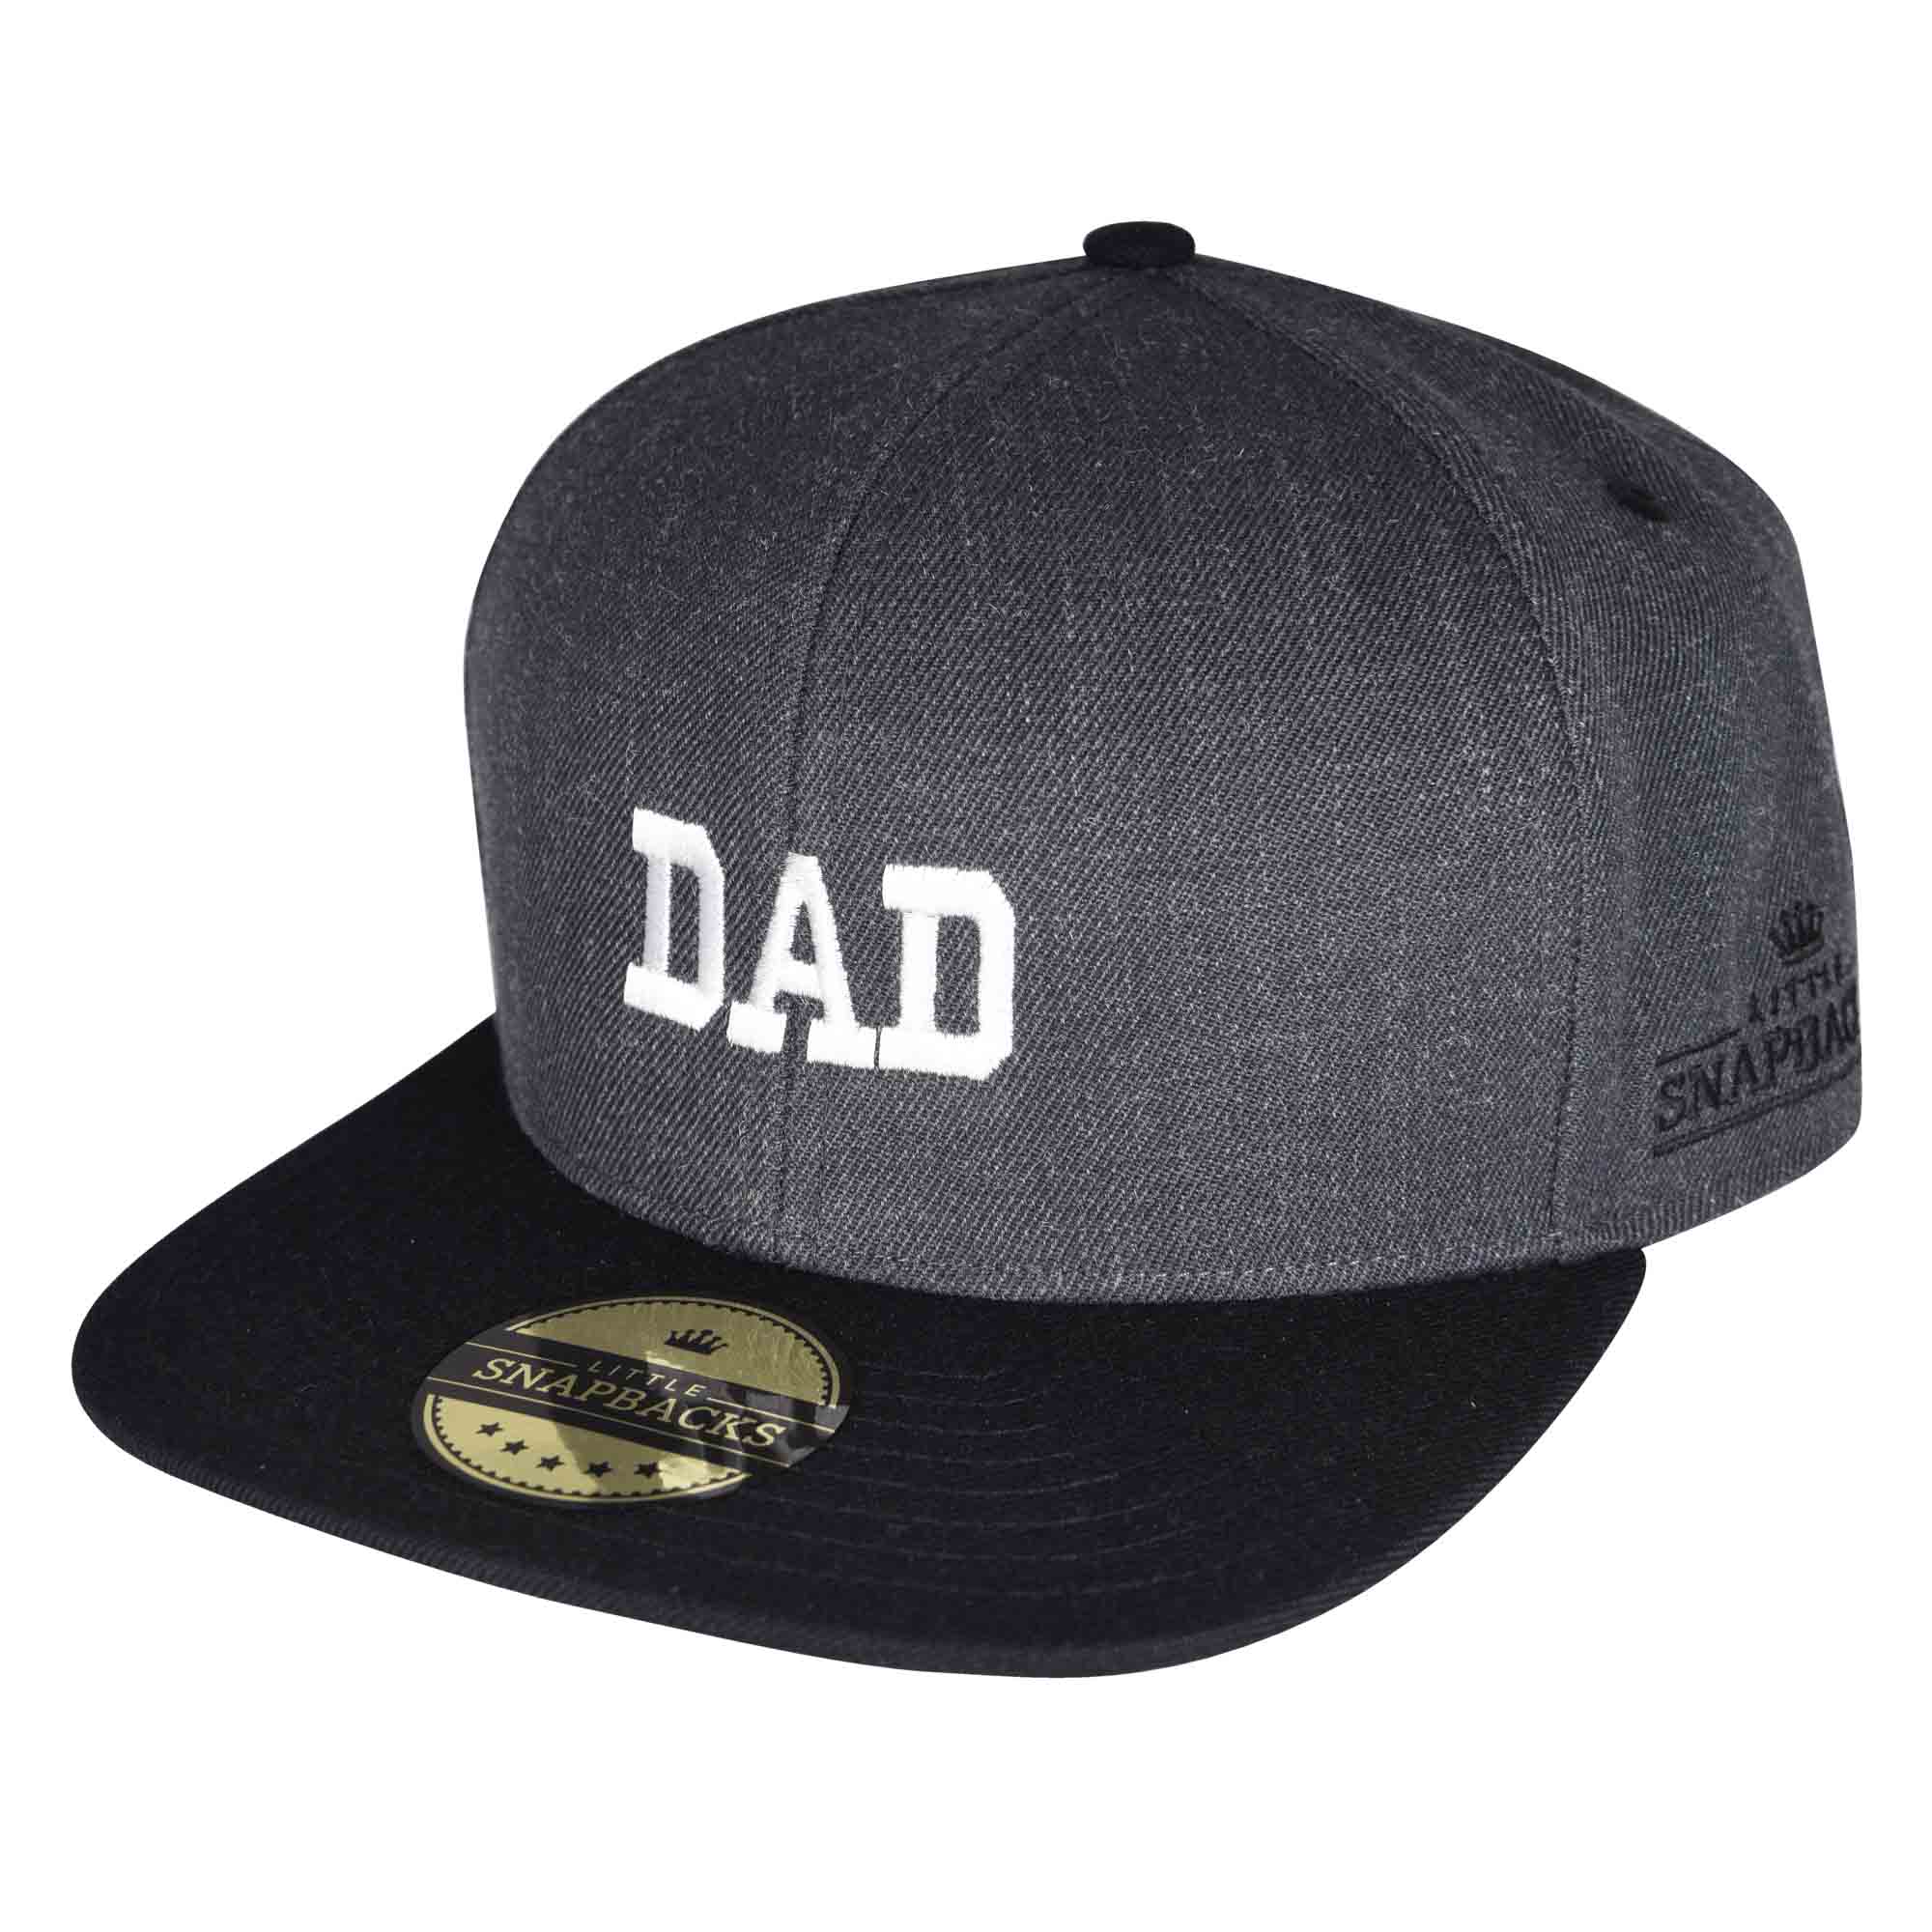 Matching Dad Hats